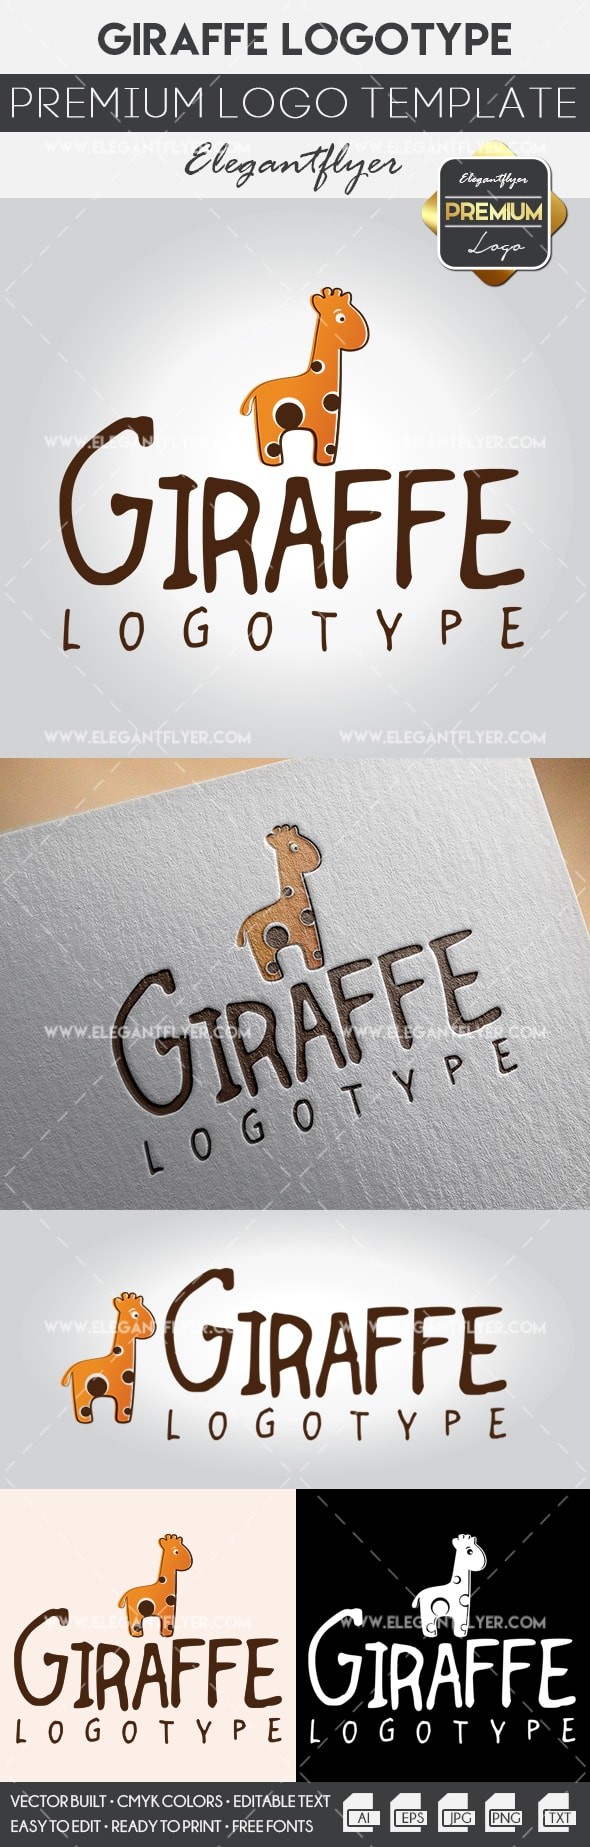 Plantilla de jirafa de dibujos animados by ElegantFlyer